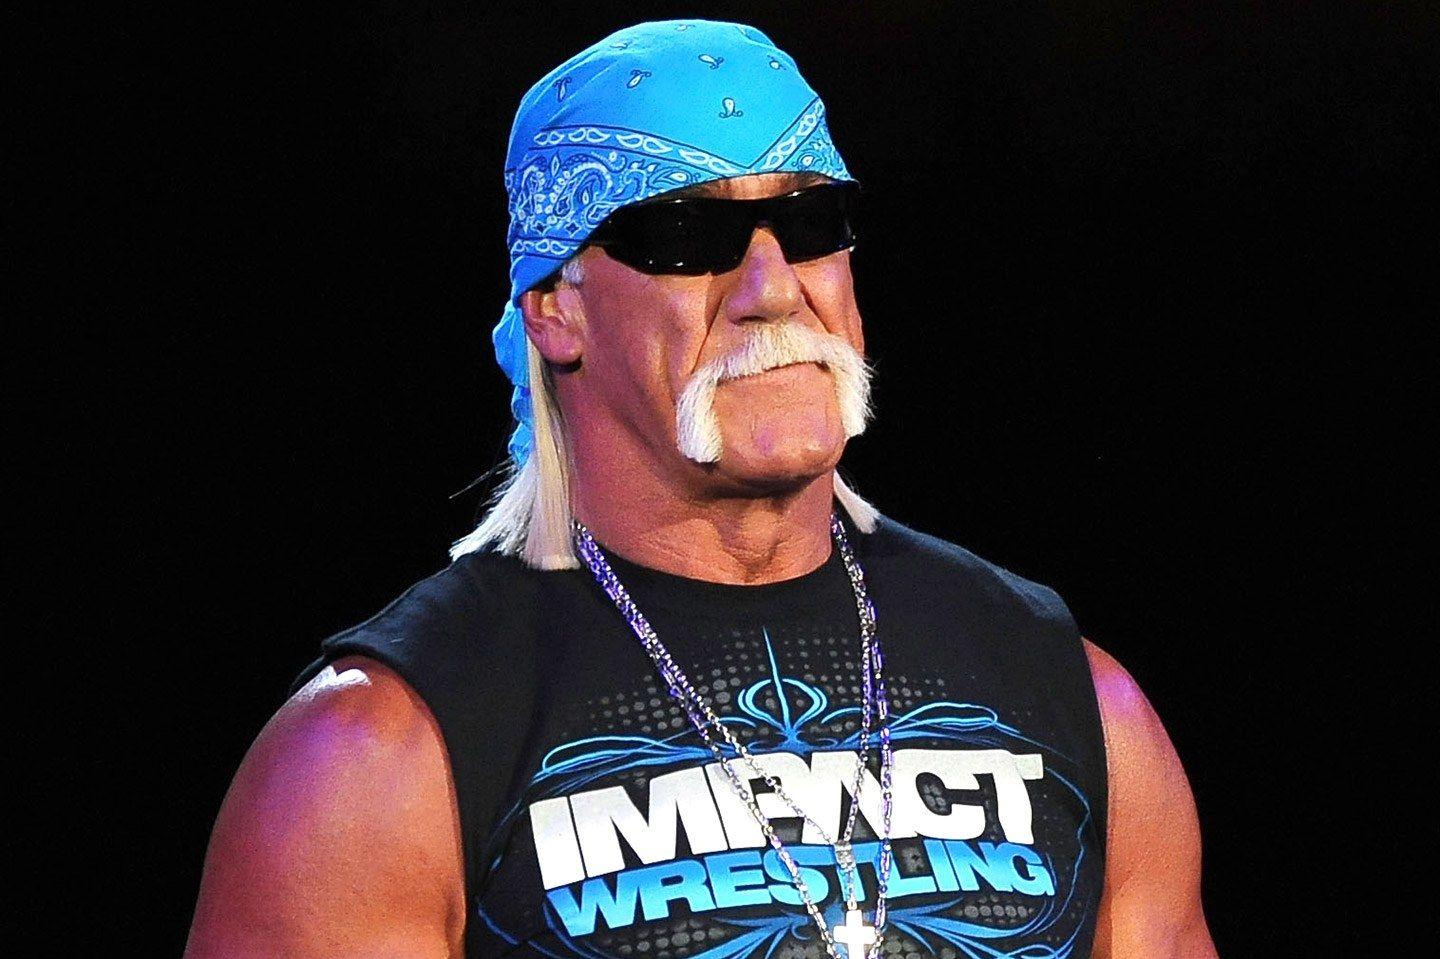 Hulk Hogan Biography, Life, and Career With Hulk Hogan HD Wallpaper